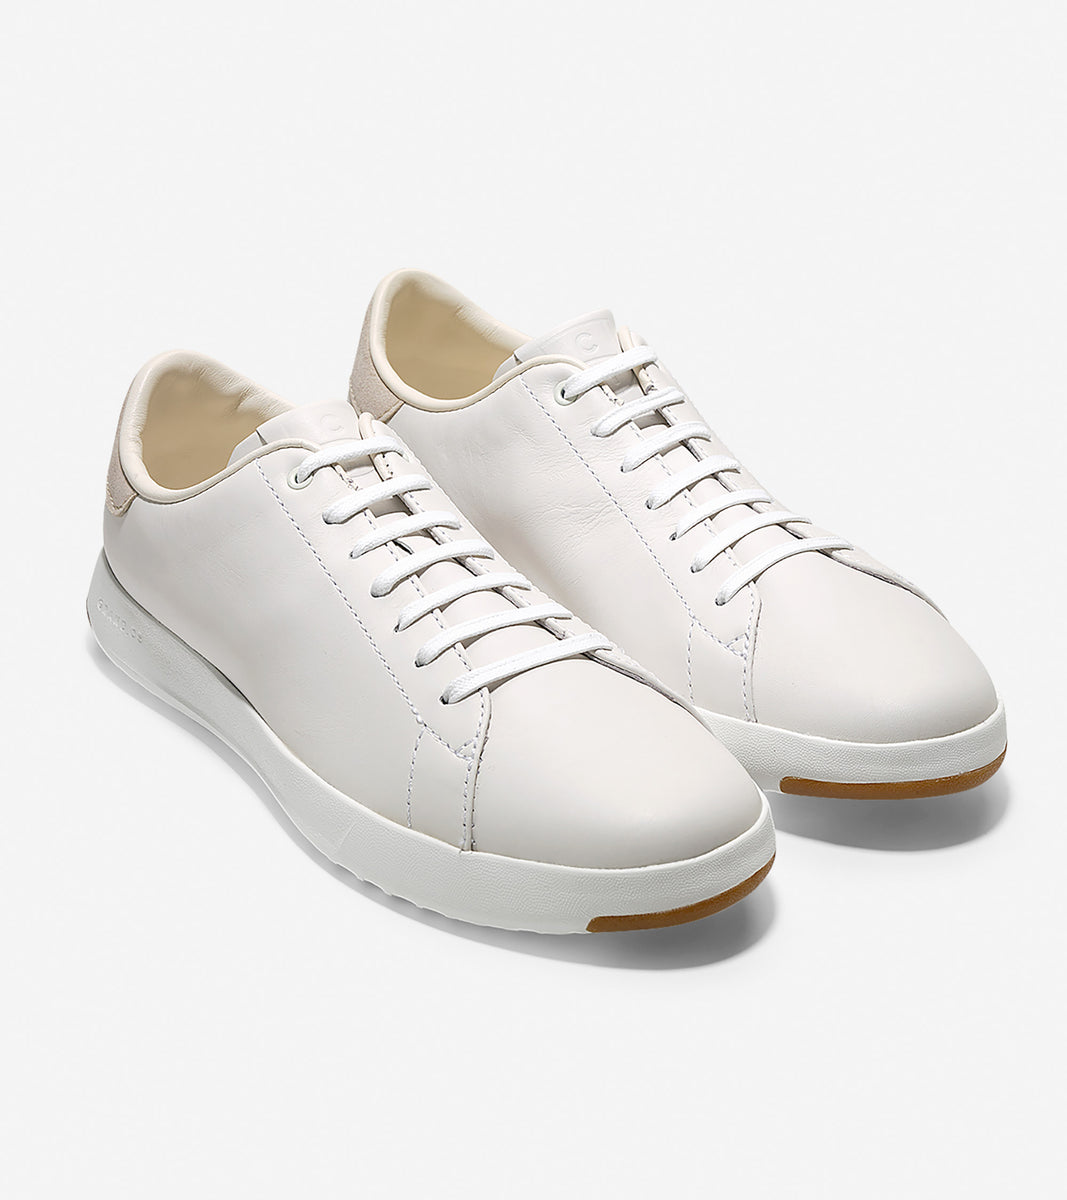 ColeHaan-GrandPrø Tennis Sneaker-c22584-White